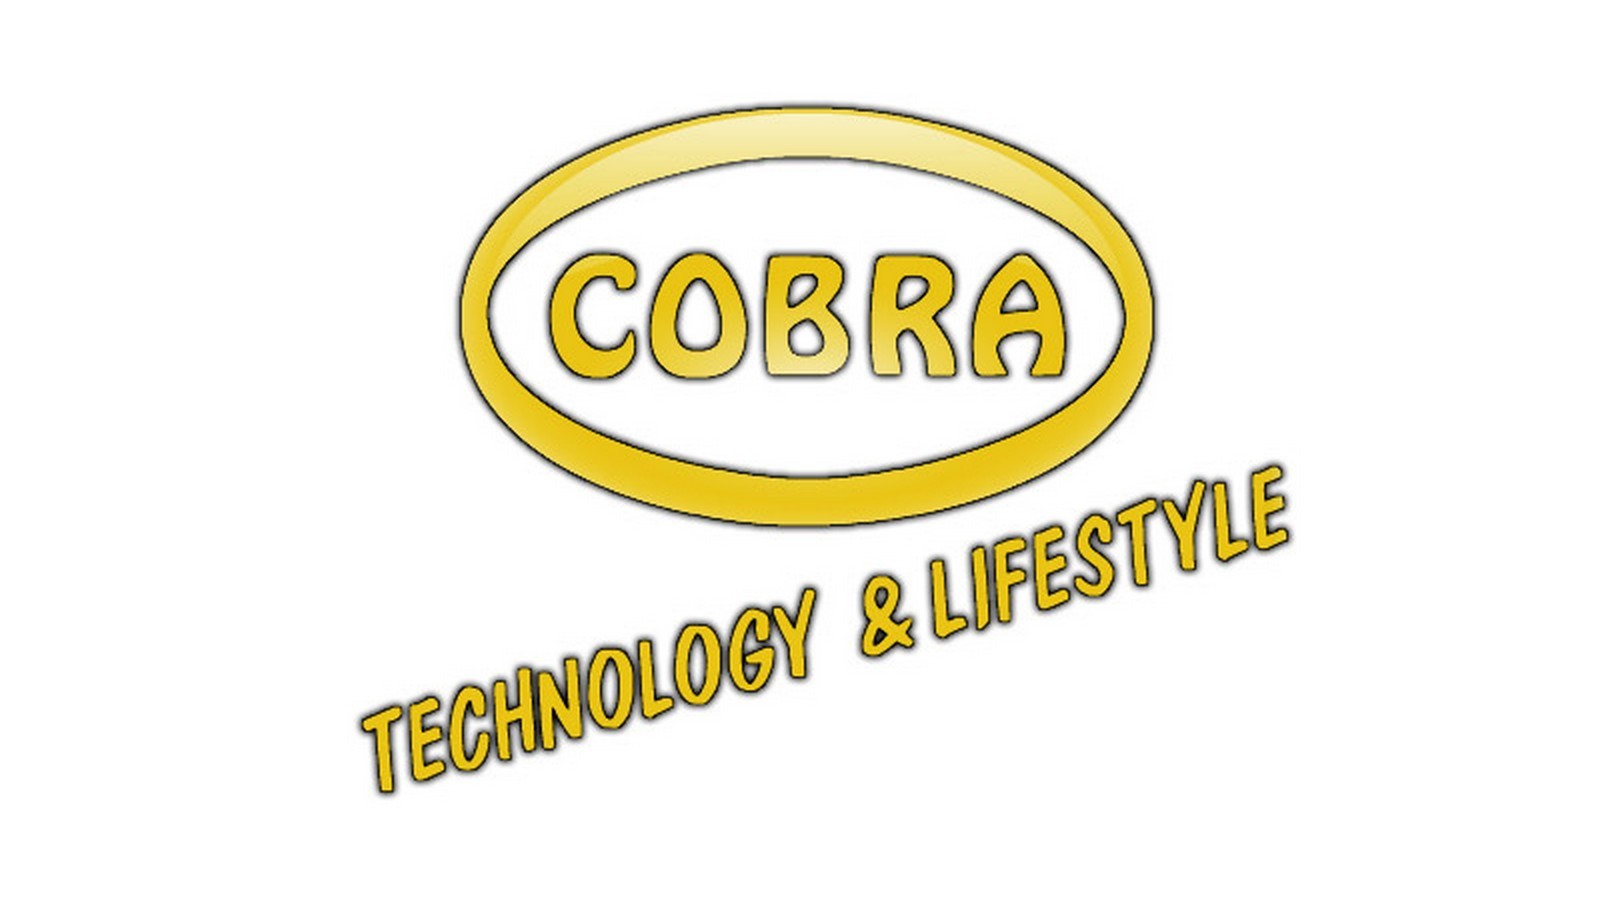 Cobra Technology Lifestyle logo